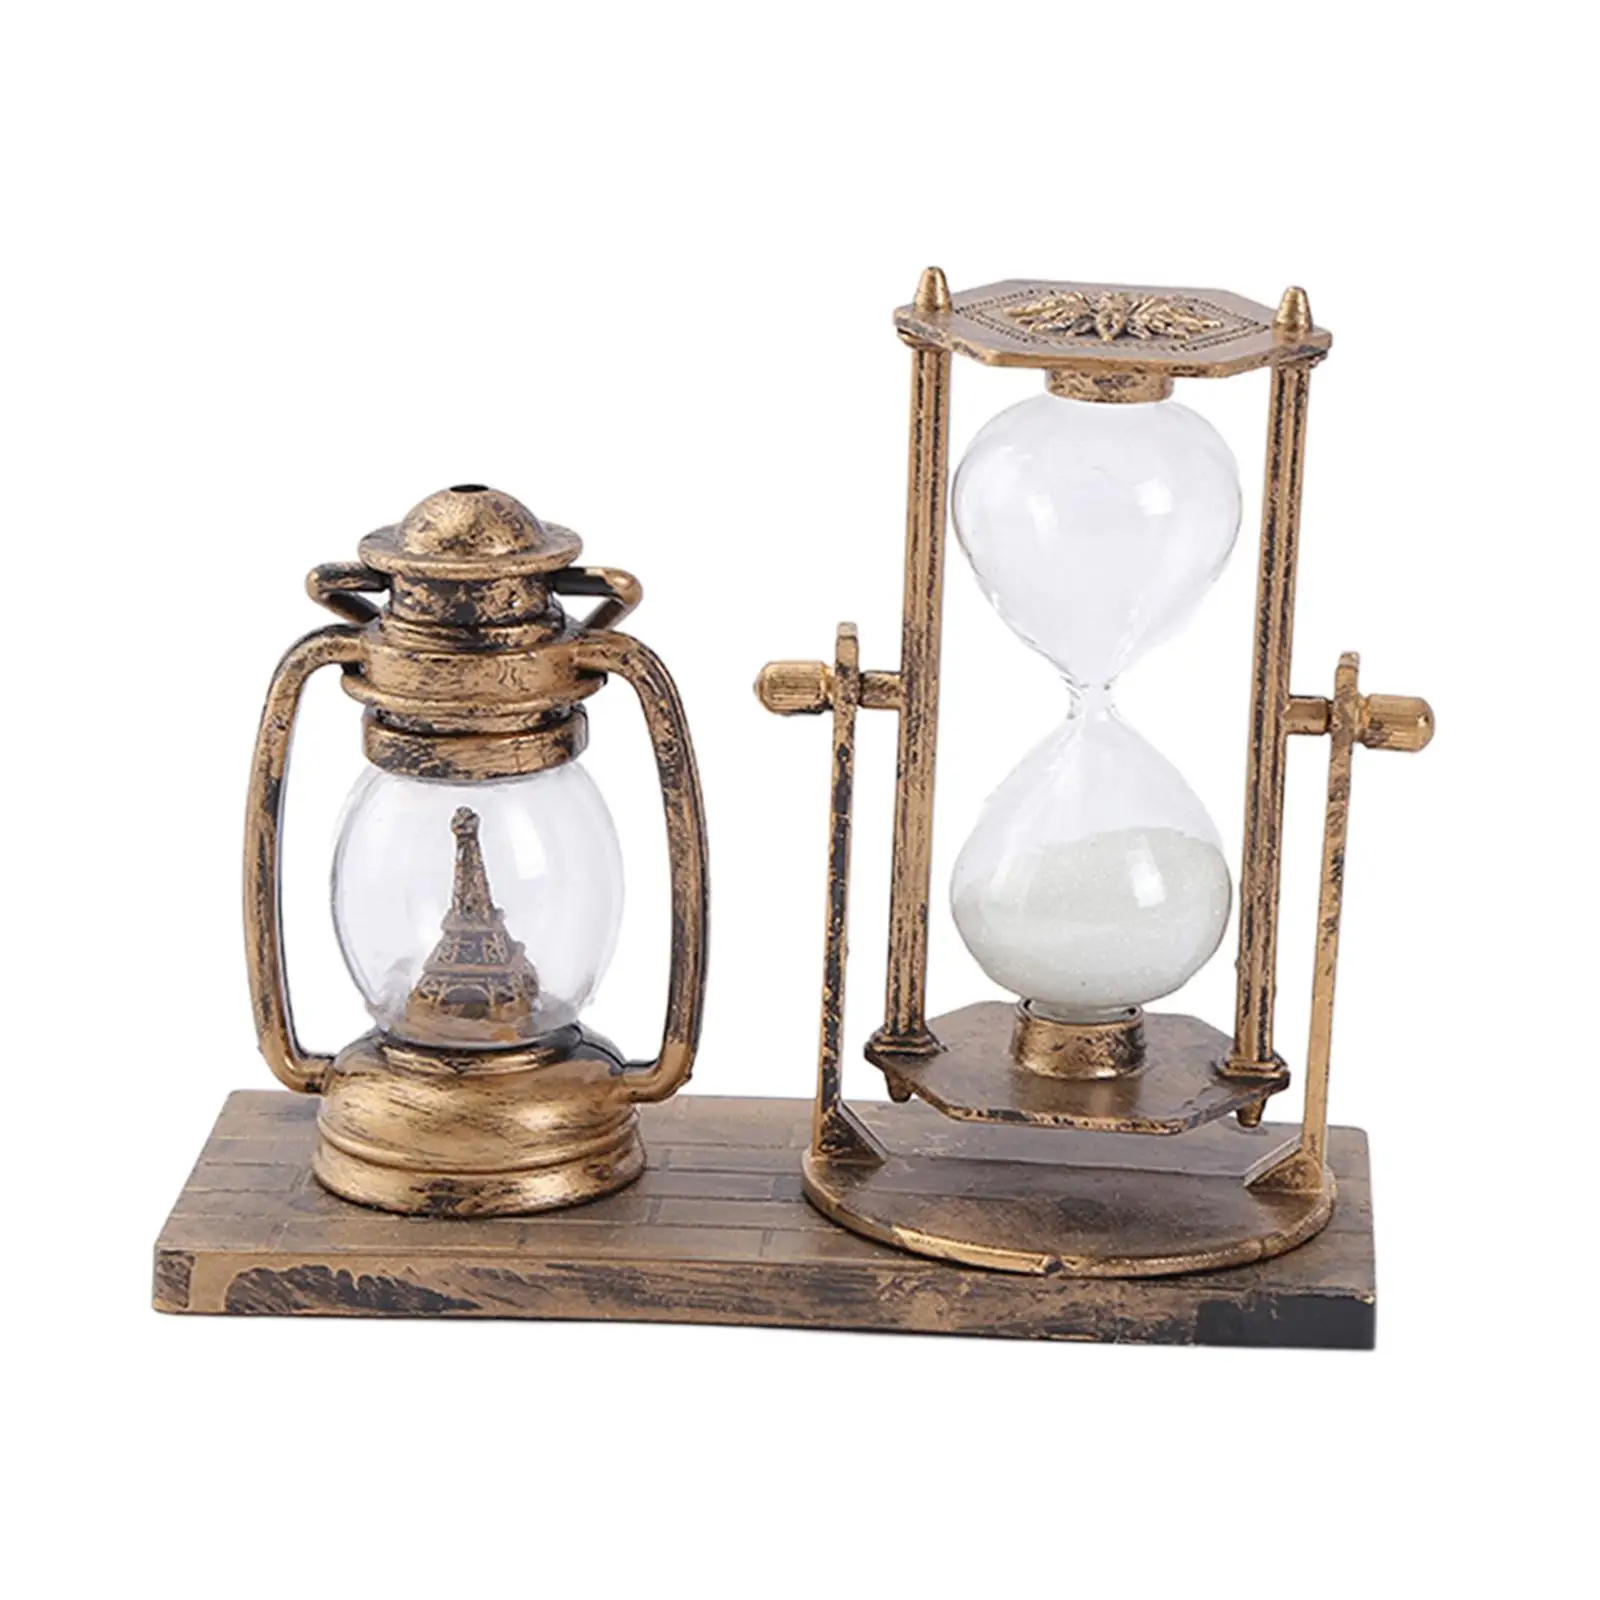 European Retro Style Lantern Hourglass Timer Decor Sandglass Table Centerpiece Creative for Desktop Office Kitchen Birthday Gift